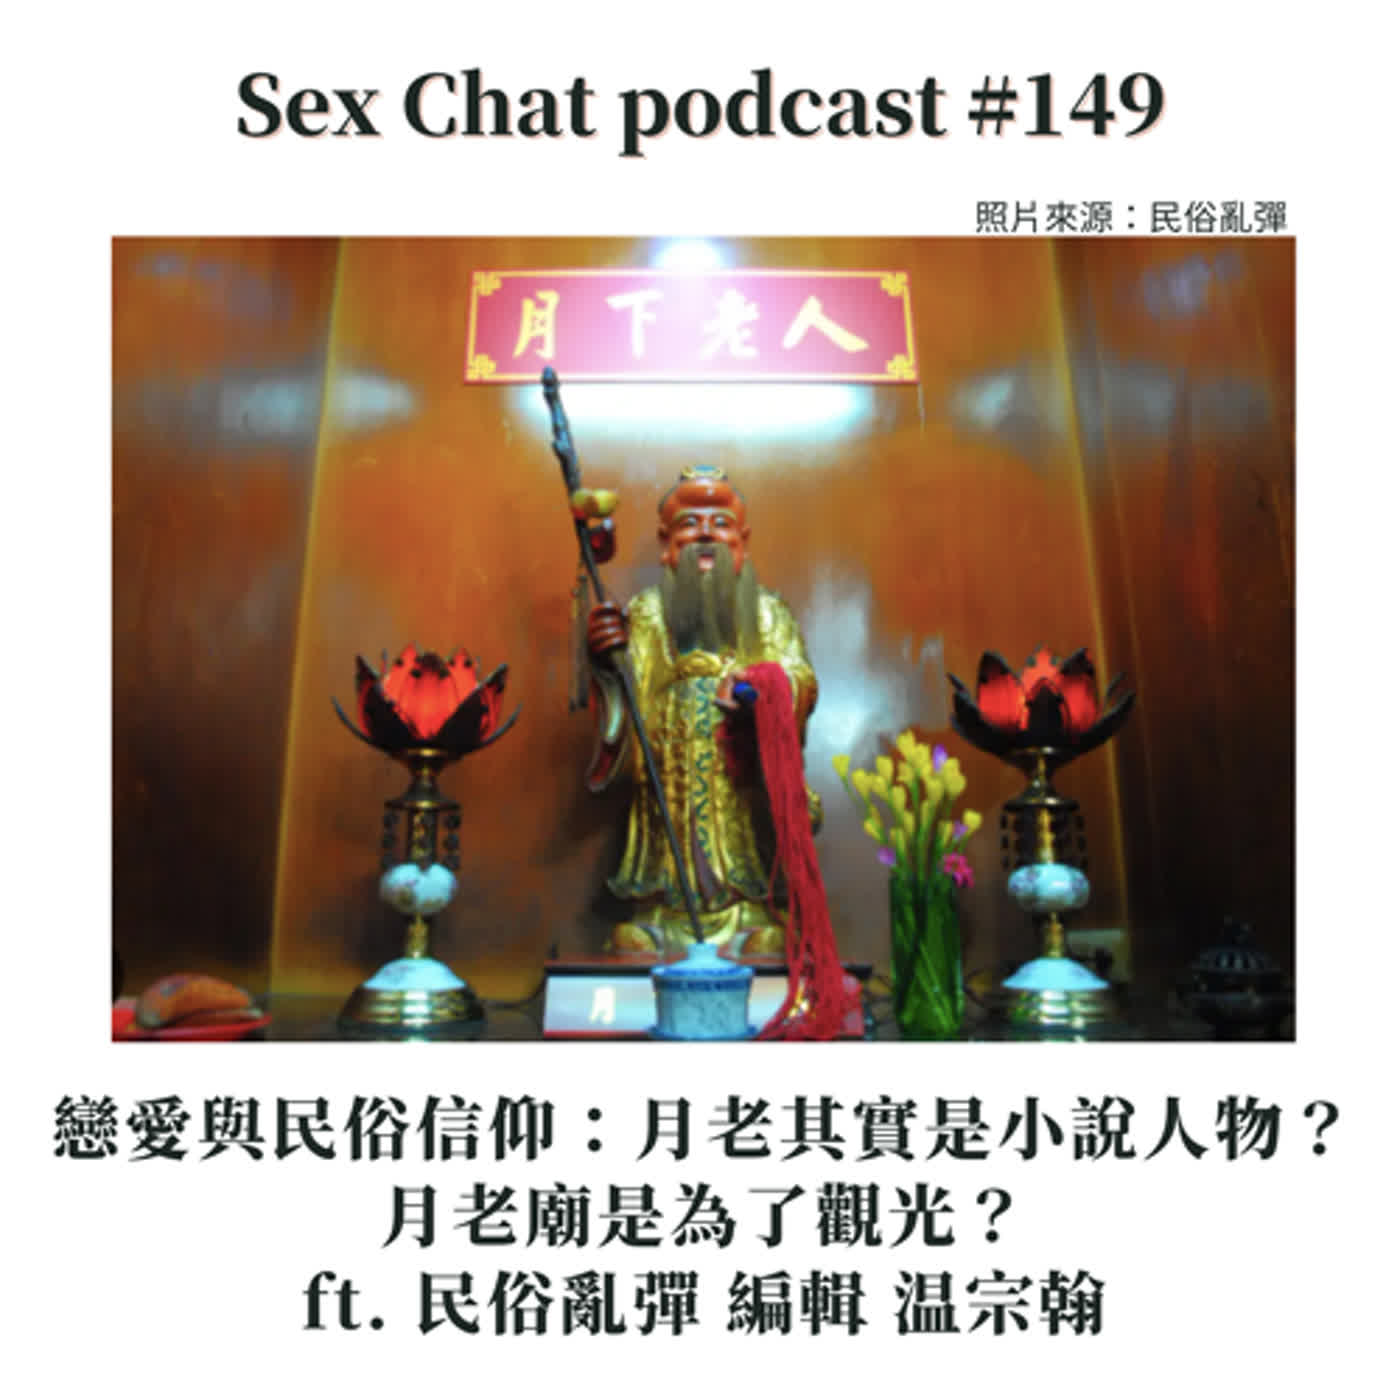 Sex Chat podcast #149 戀愛與民俗信仰：月老其實是小說人物？月老廟是為了觀光？ft. 民俗亂彈 編輯 温宗翰